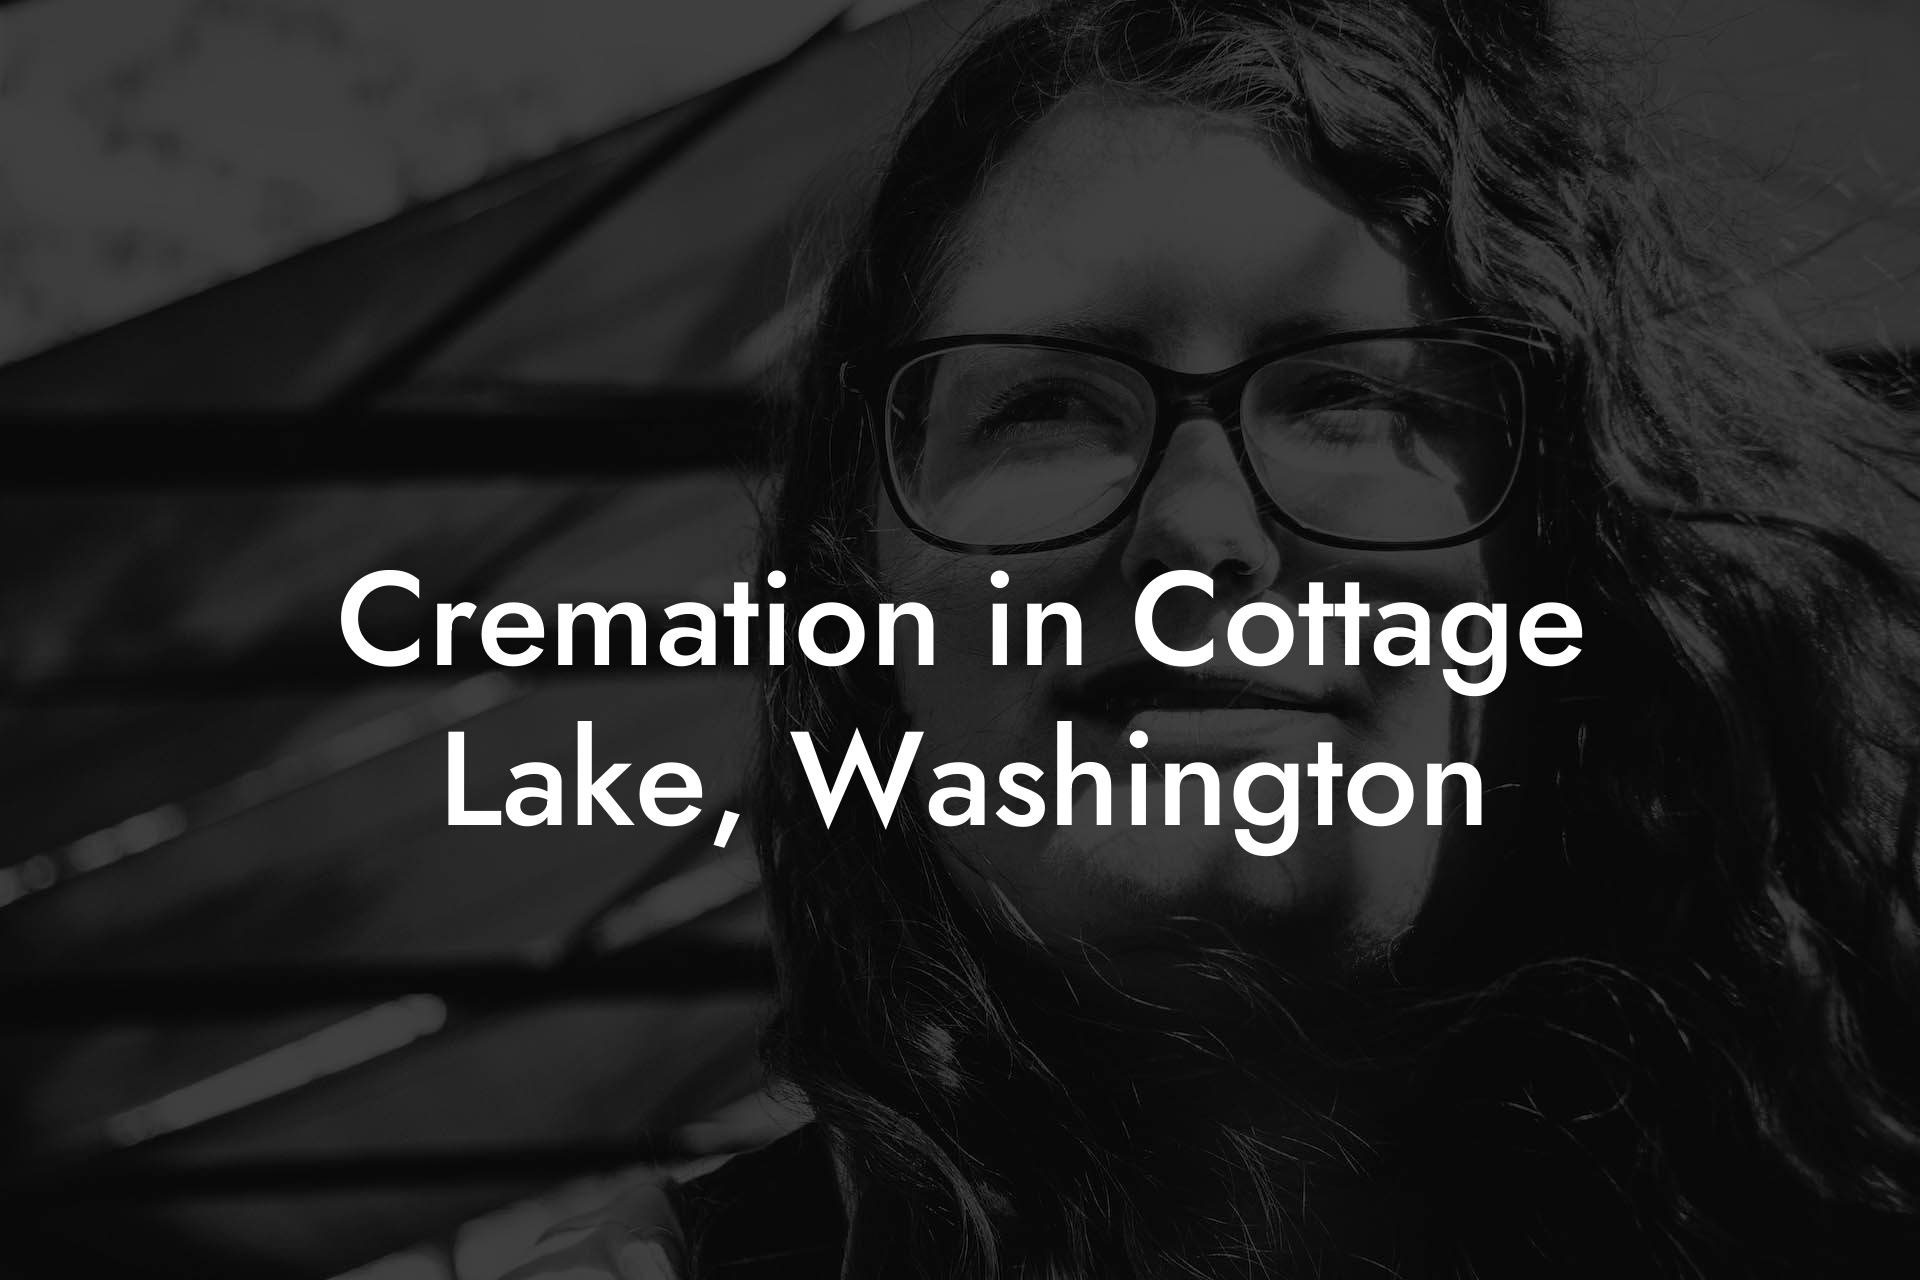 Cremation in Cottage Lake, Washington